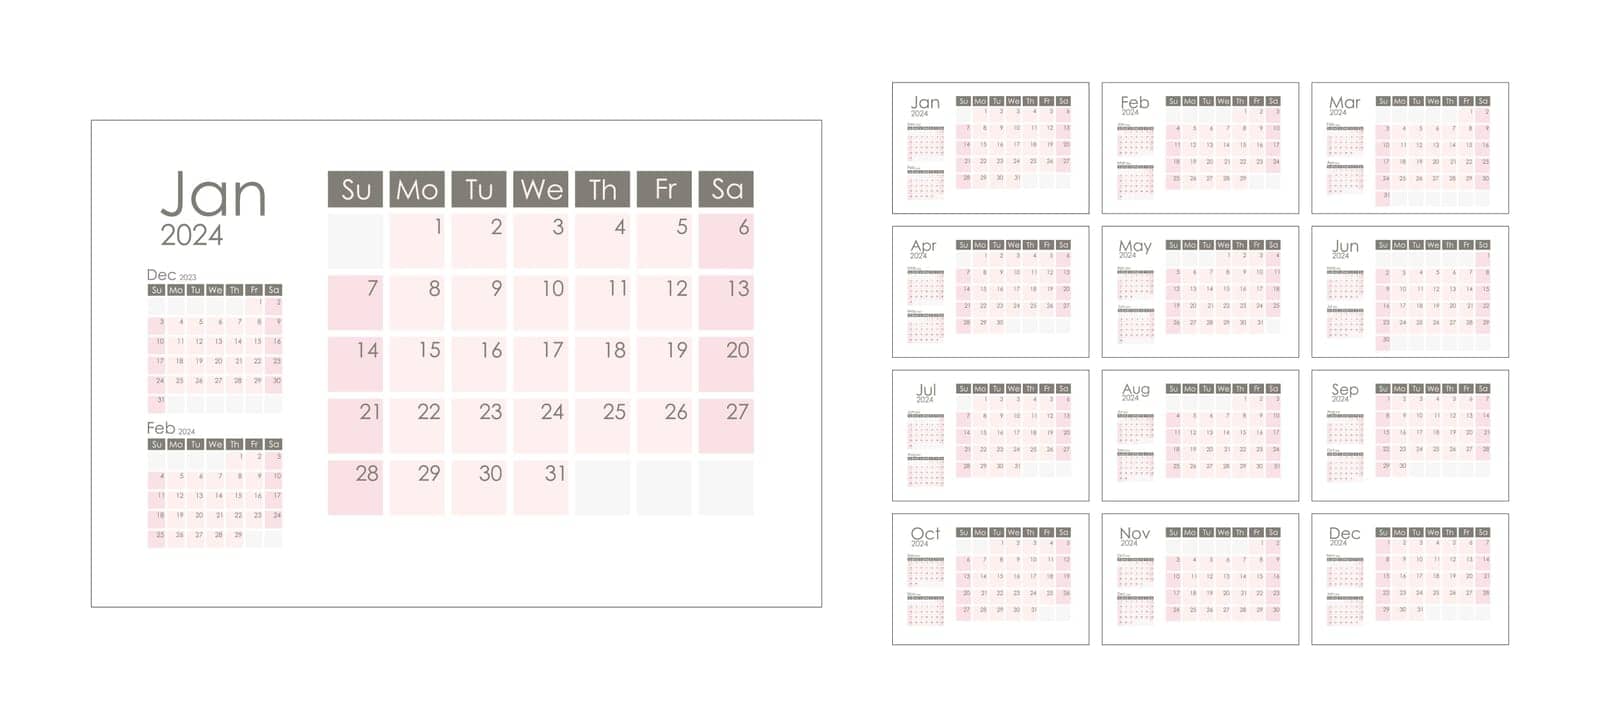 Calendar 2024 horizontal by easycolors